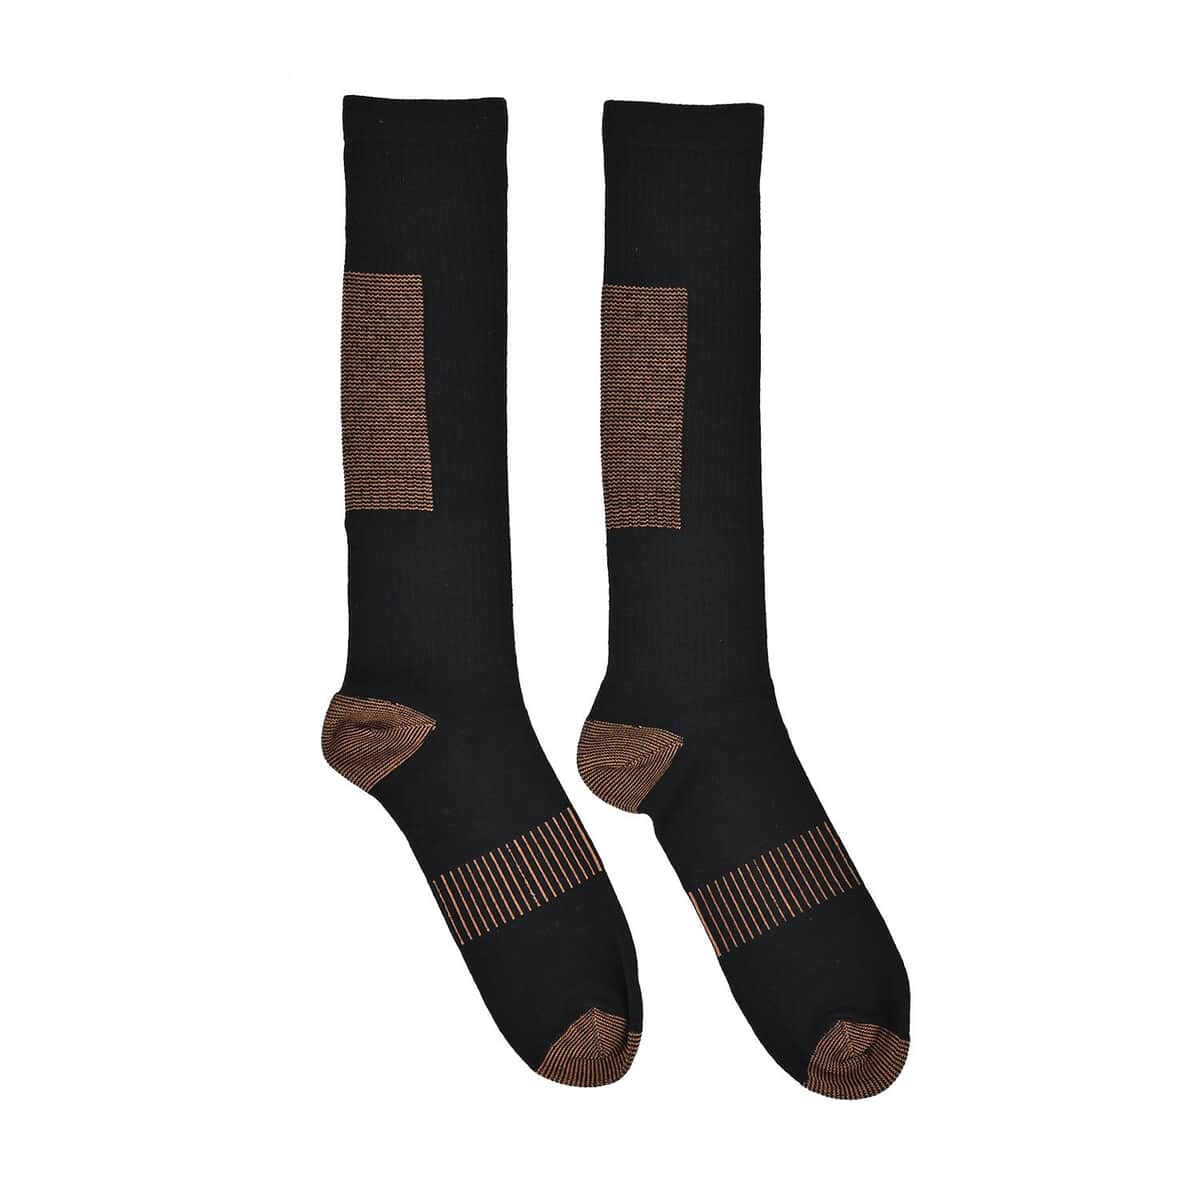 Set of 4 Pairs Knee Length Copper Infused Compression Socks - Black (S/M)  image number 1